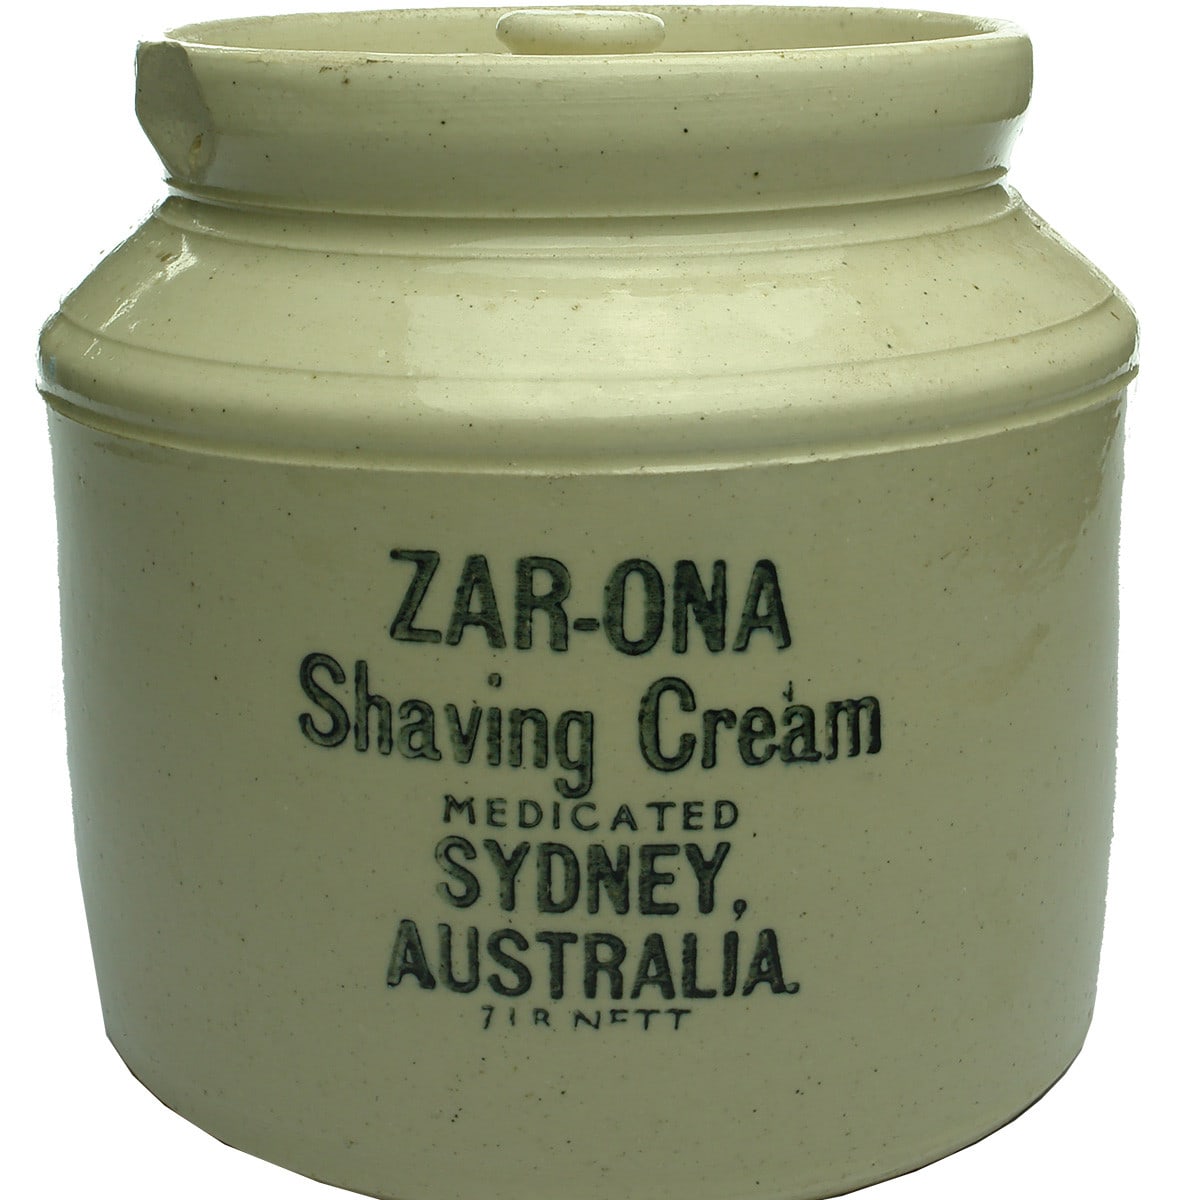 Jar. Zar-Ona Shaving Cream, Sydney. All White. 7 Pounds. (New South Wales)